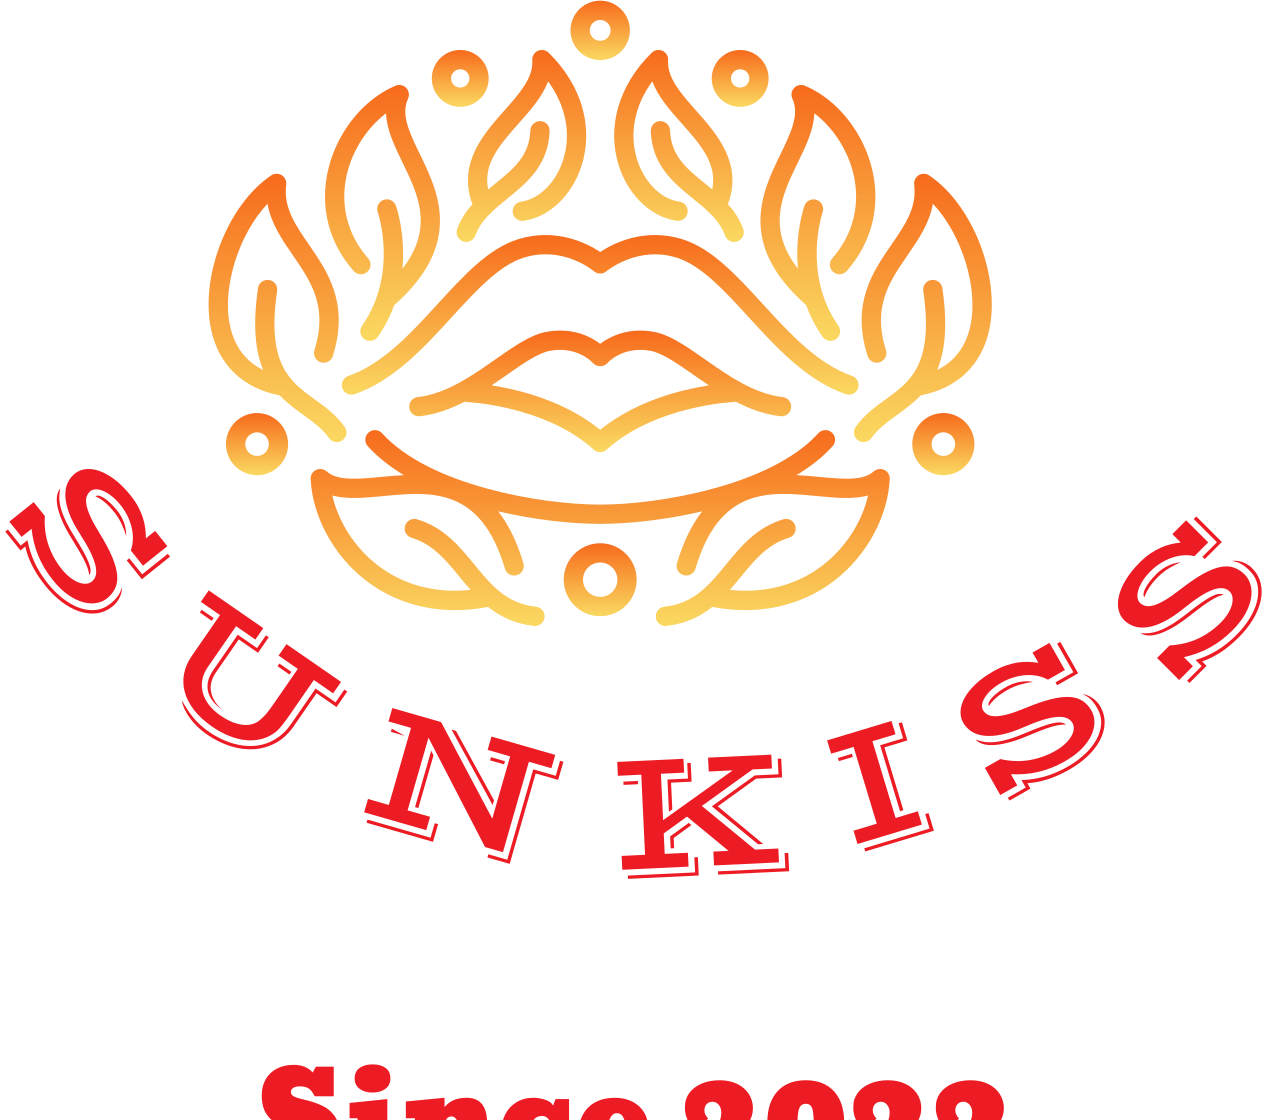 SUNKISS 's logo